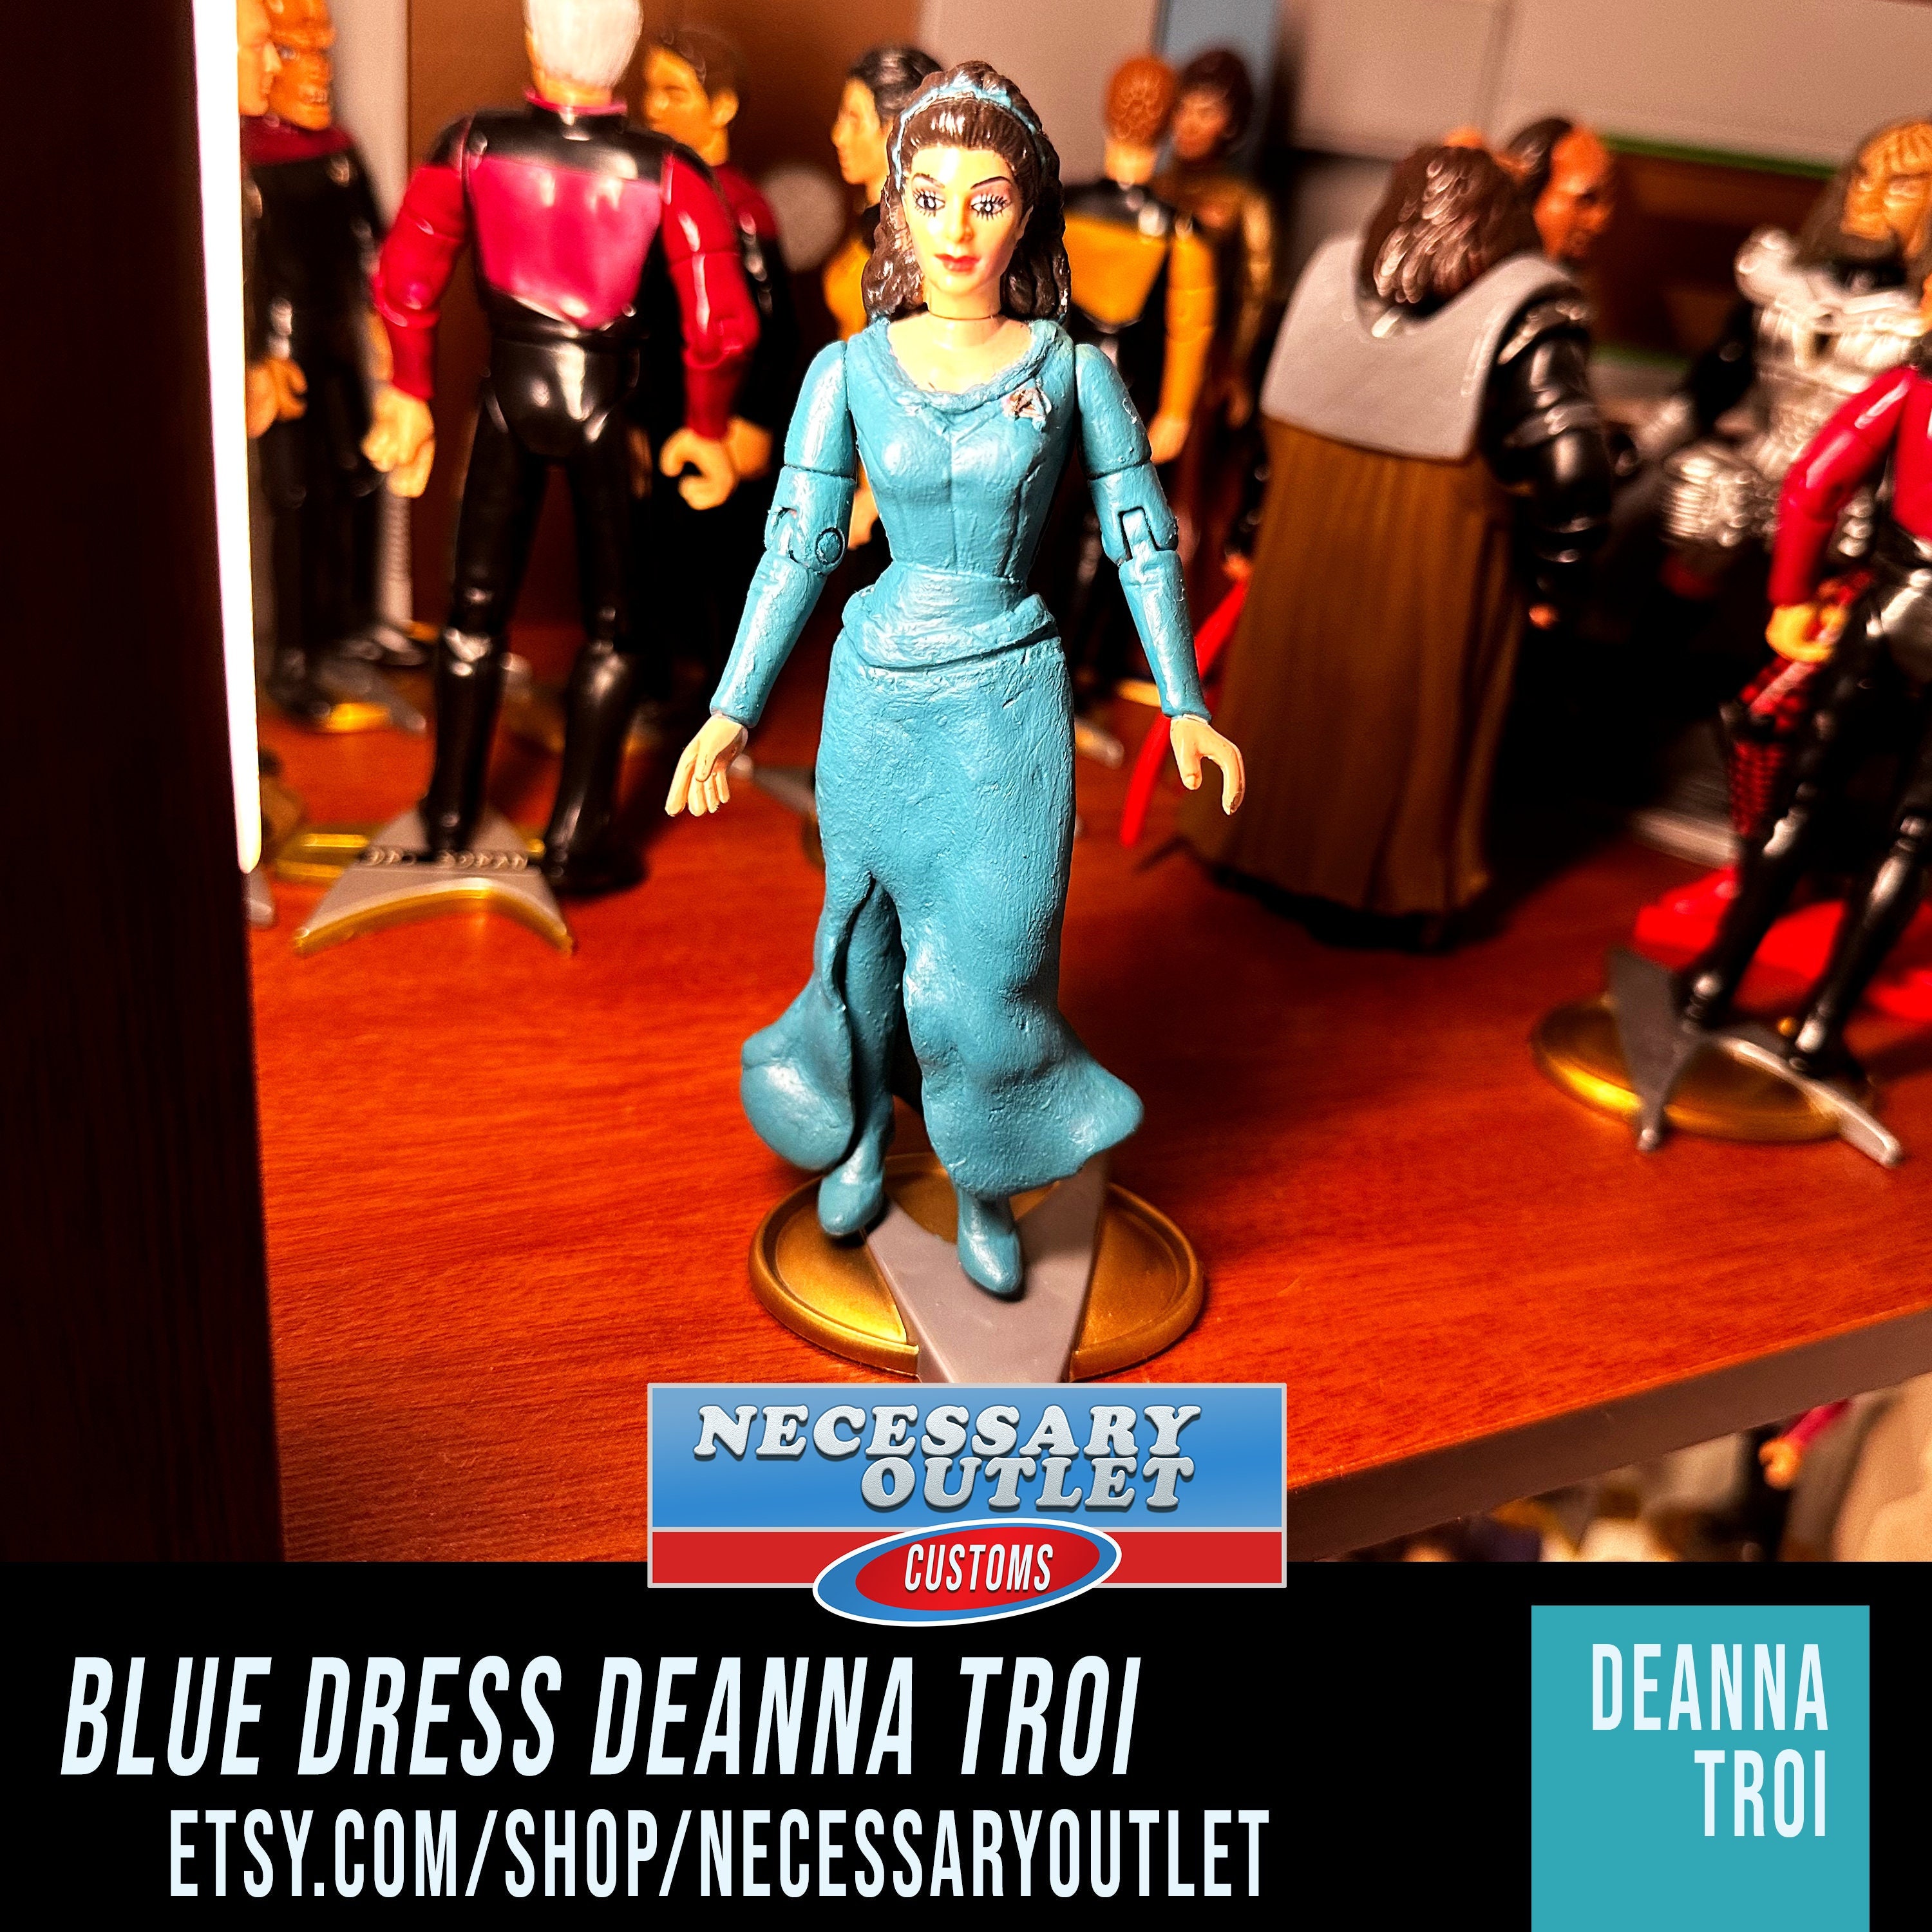 Star Trek TNG Deanna Troi From the Offspring pic